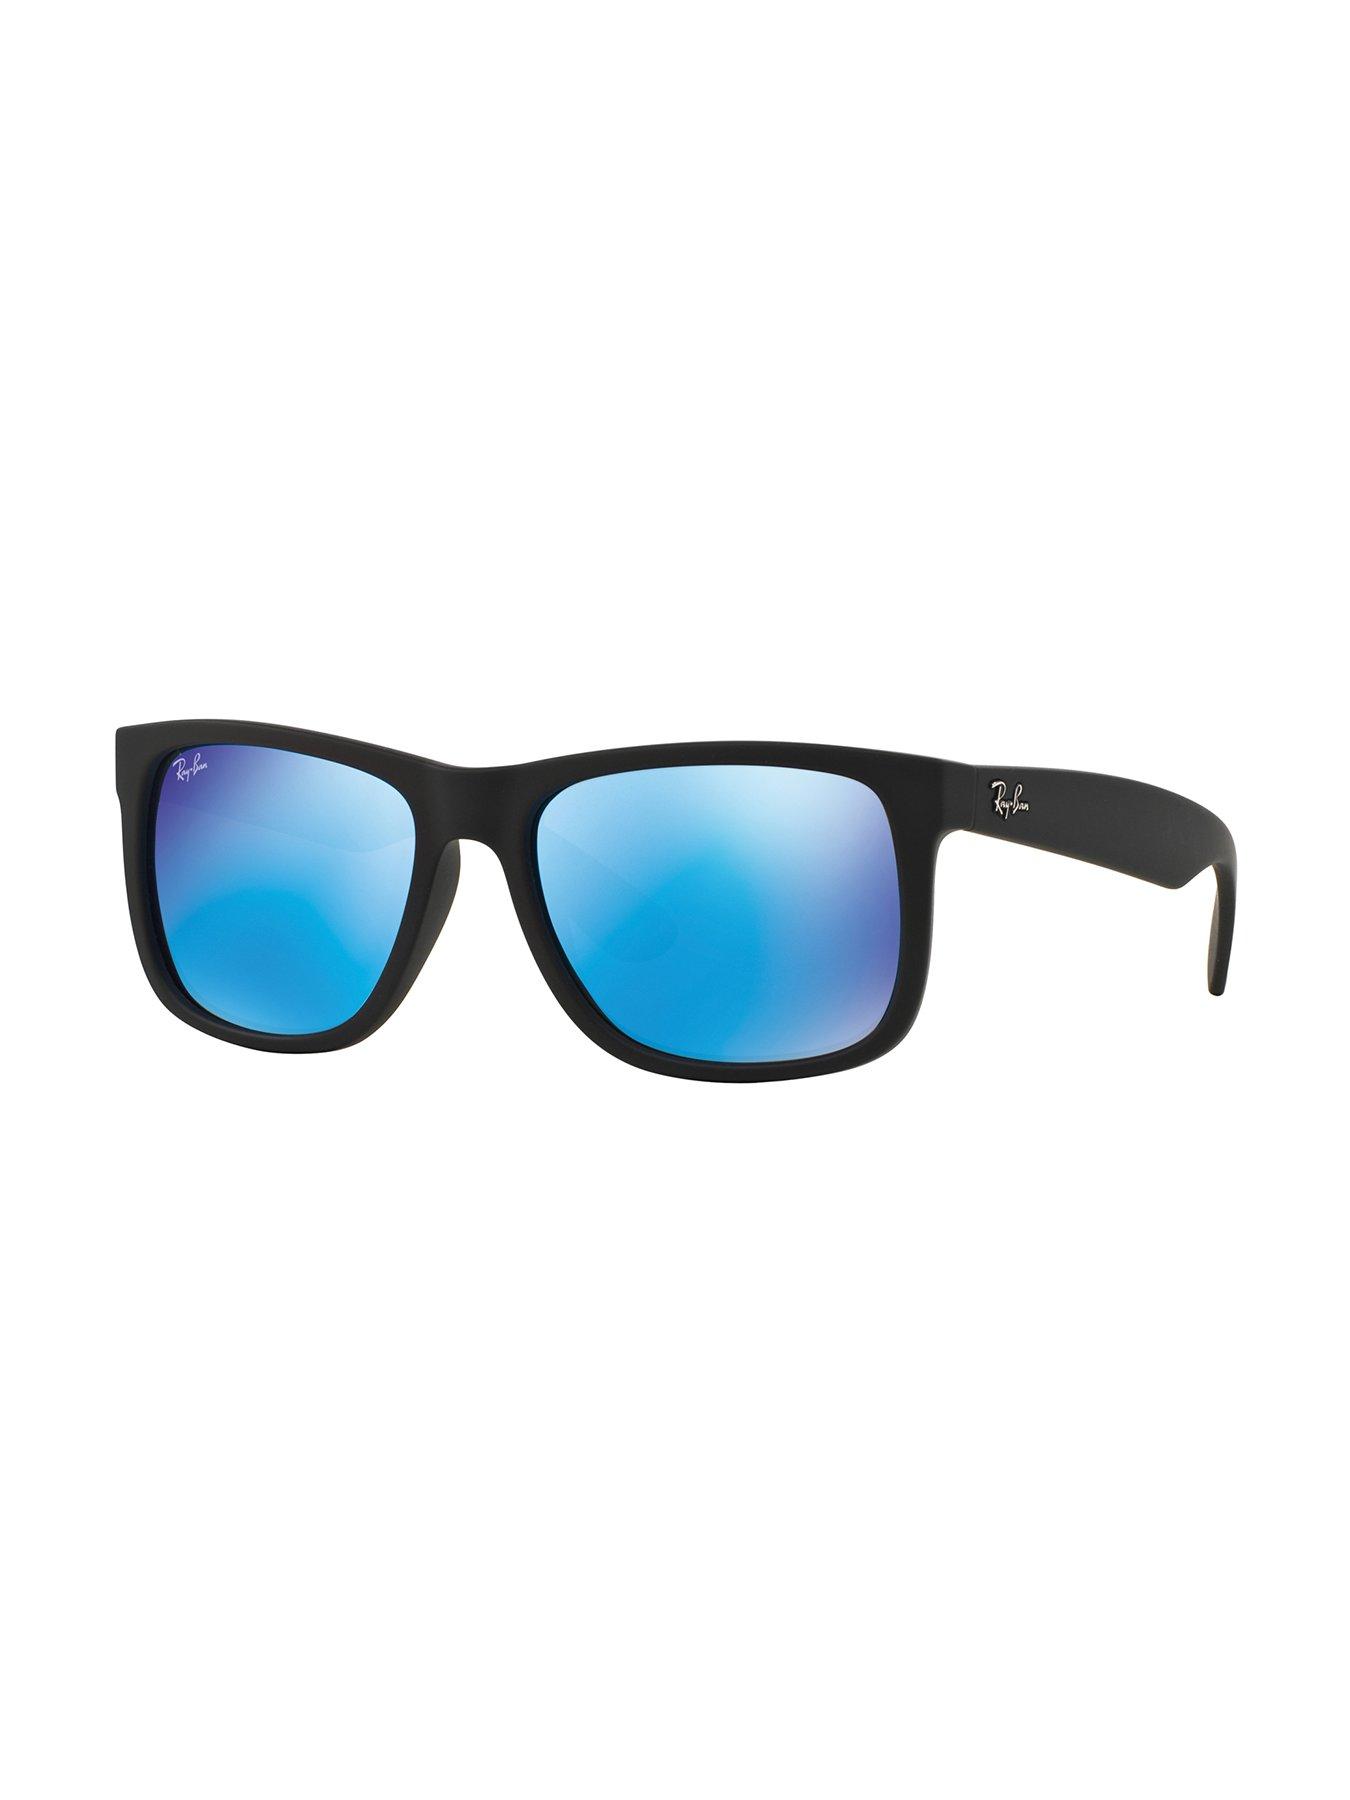 Ray-Ban ORB4165 Mirror Lens Justin Sunglasses - Black/Blue 